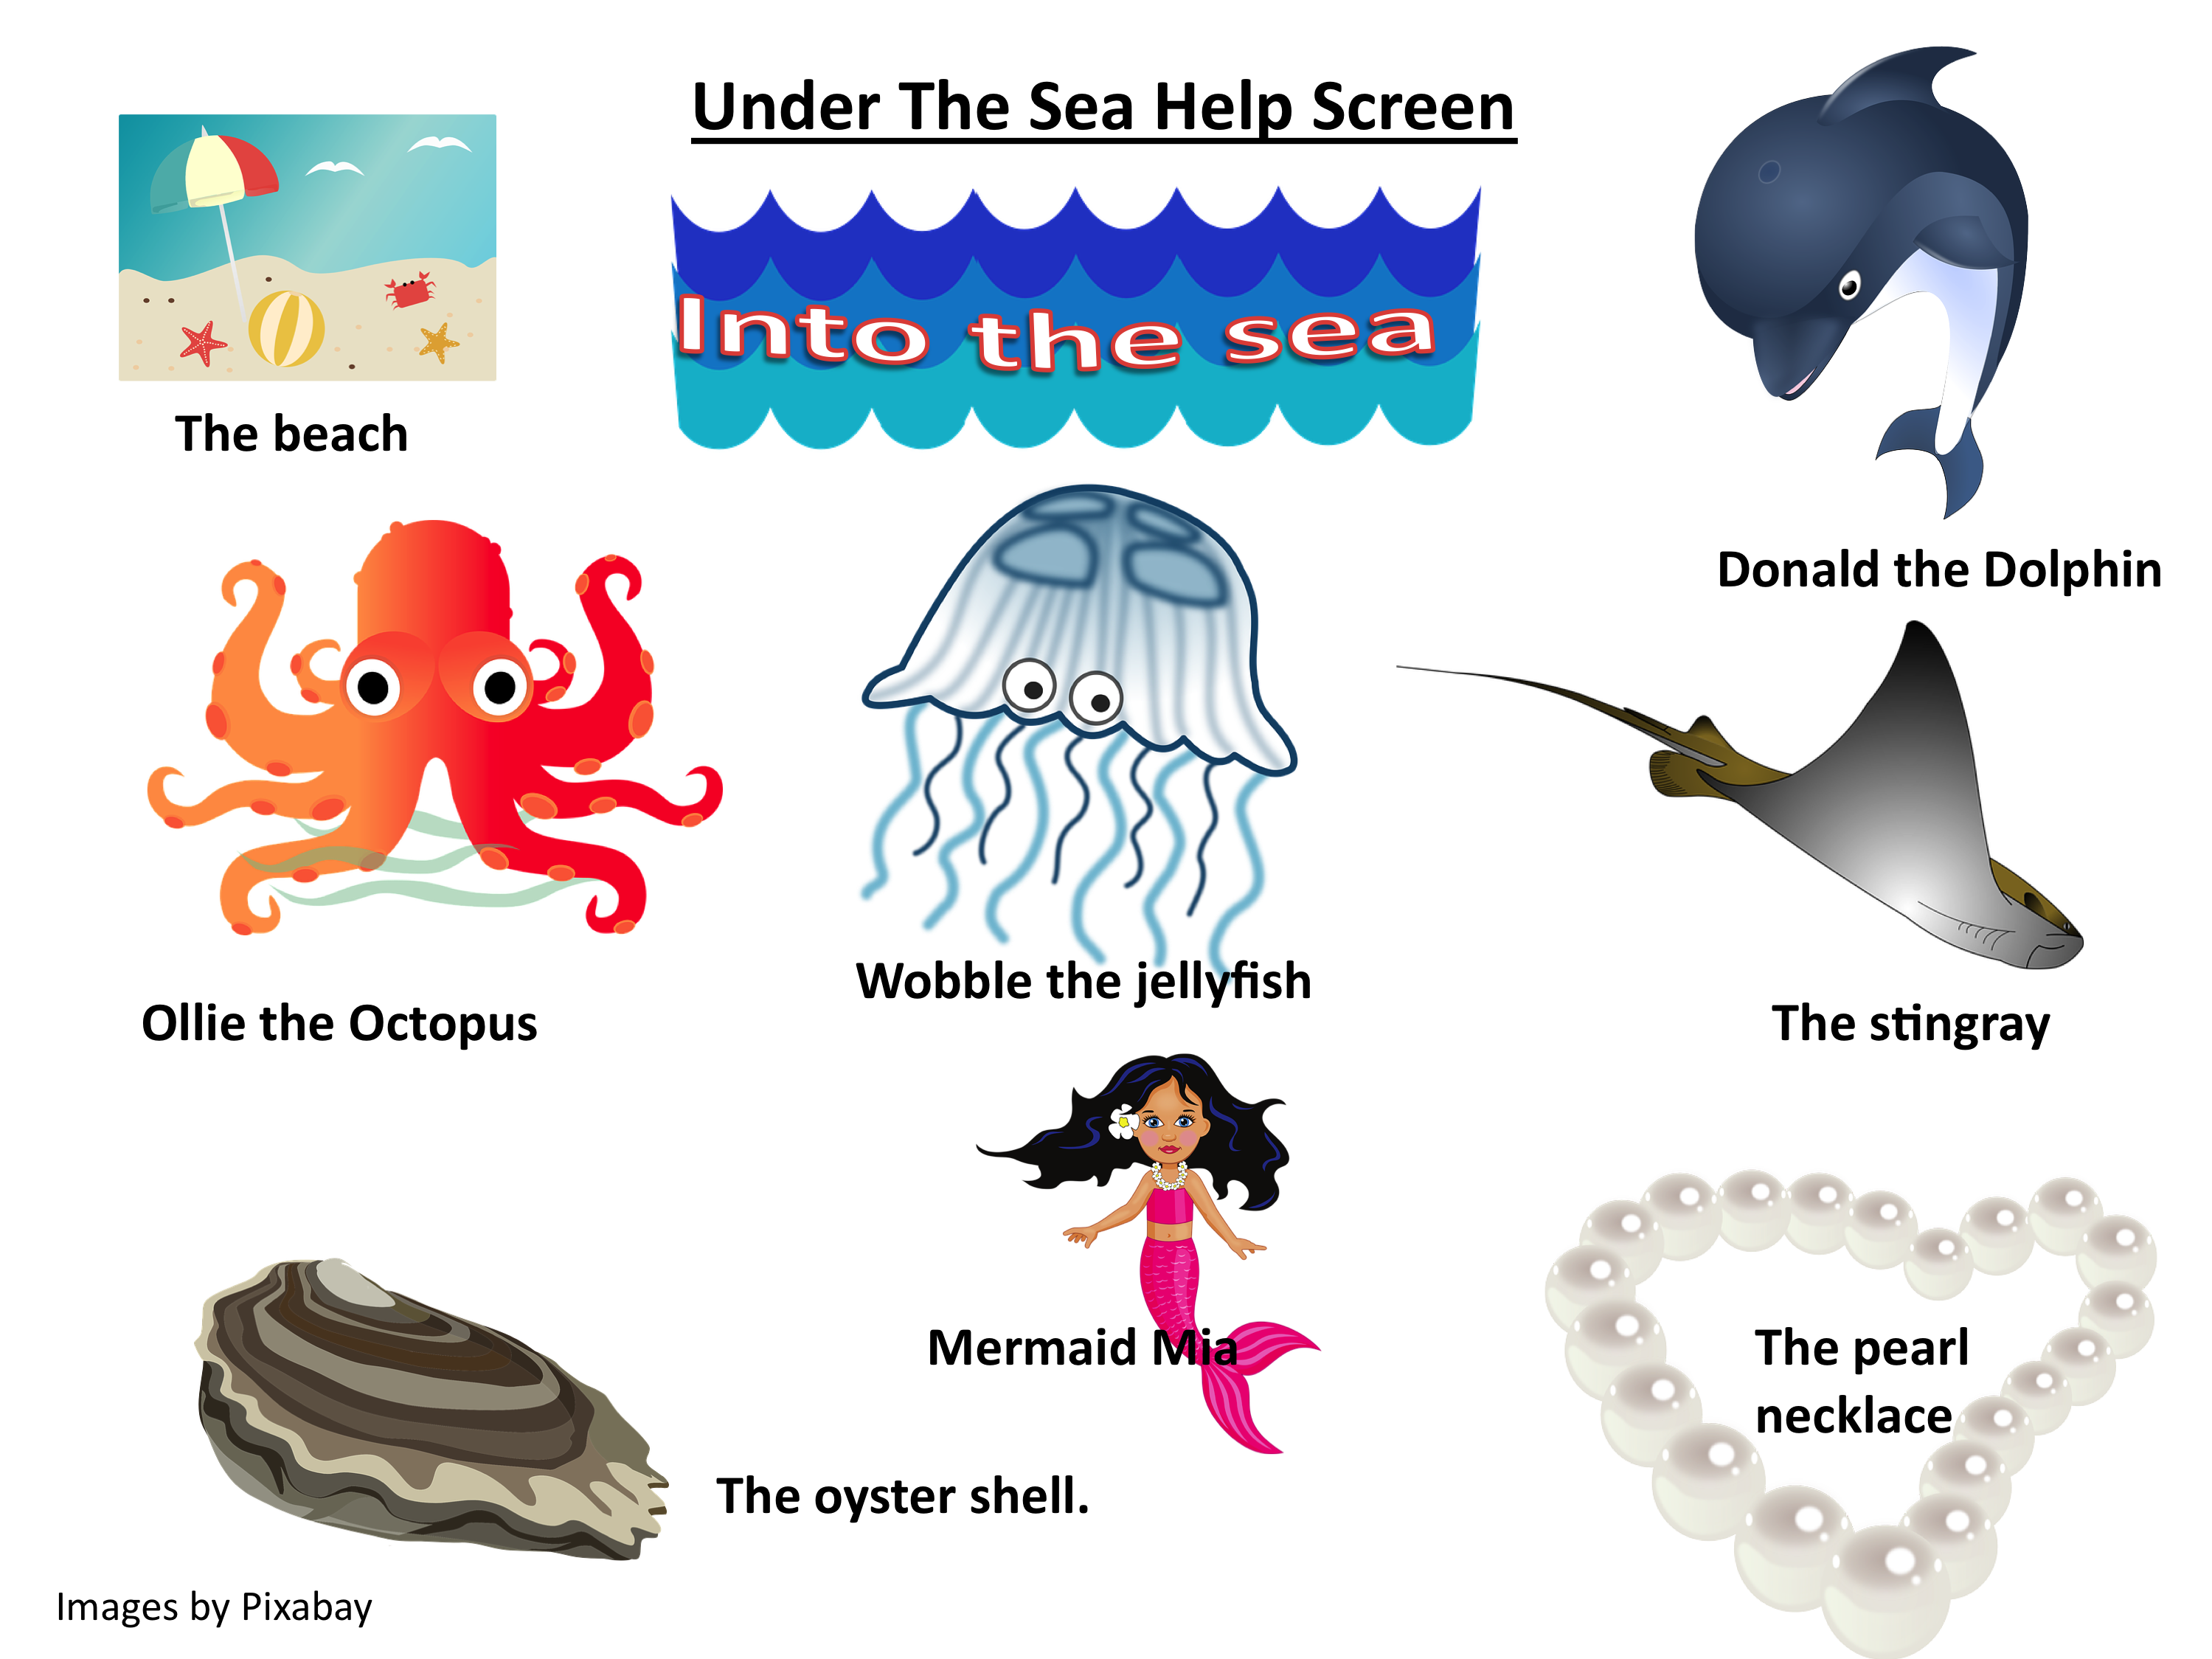 Under The Sea Help Screen